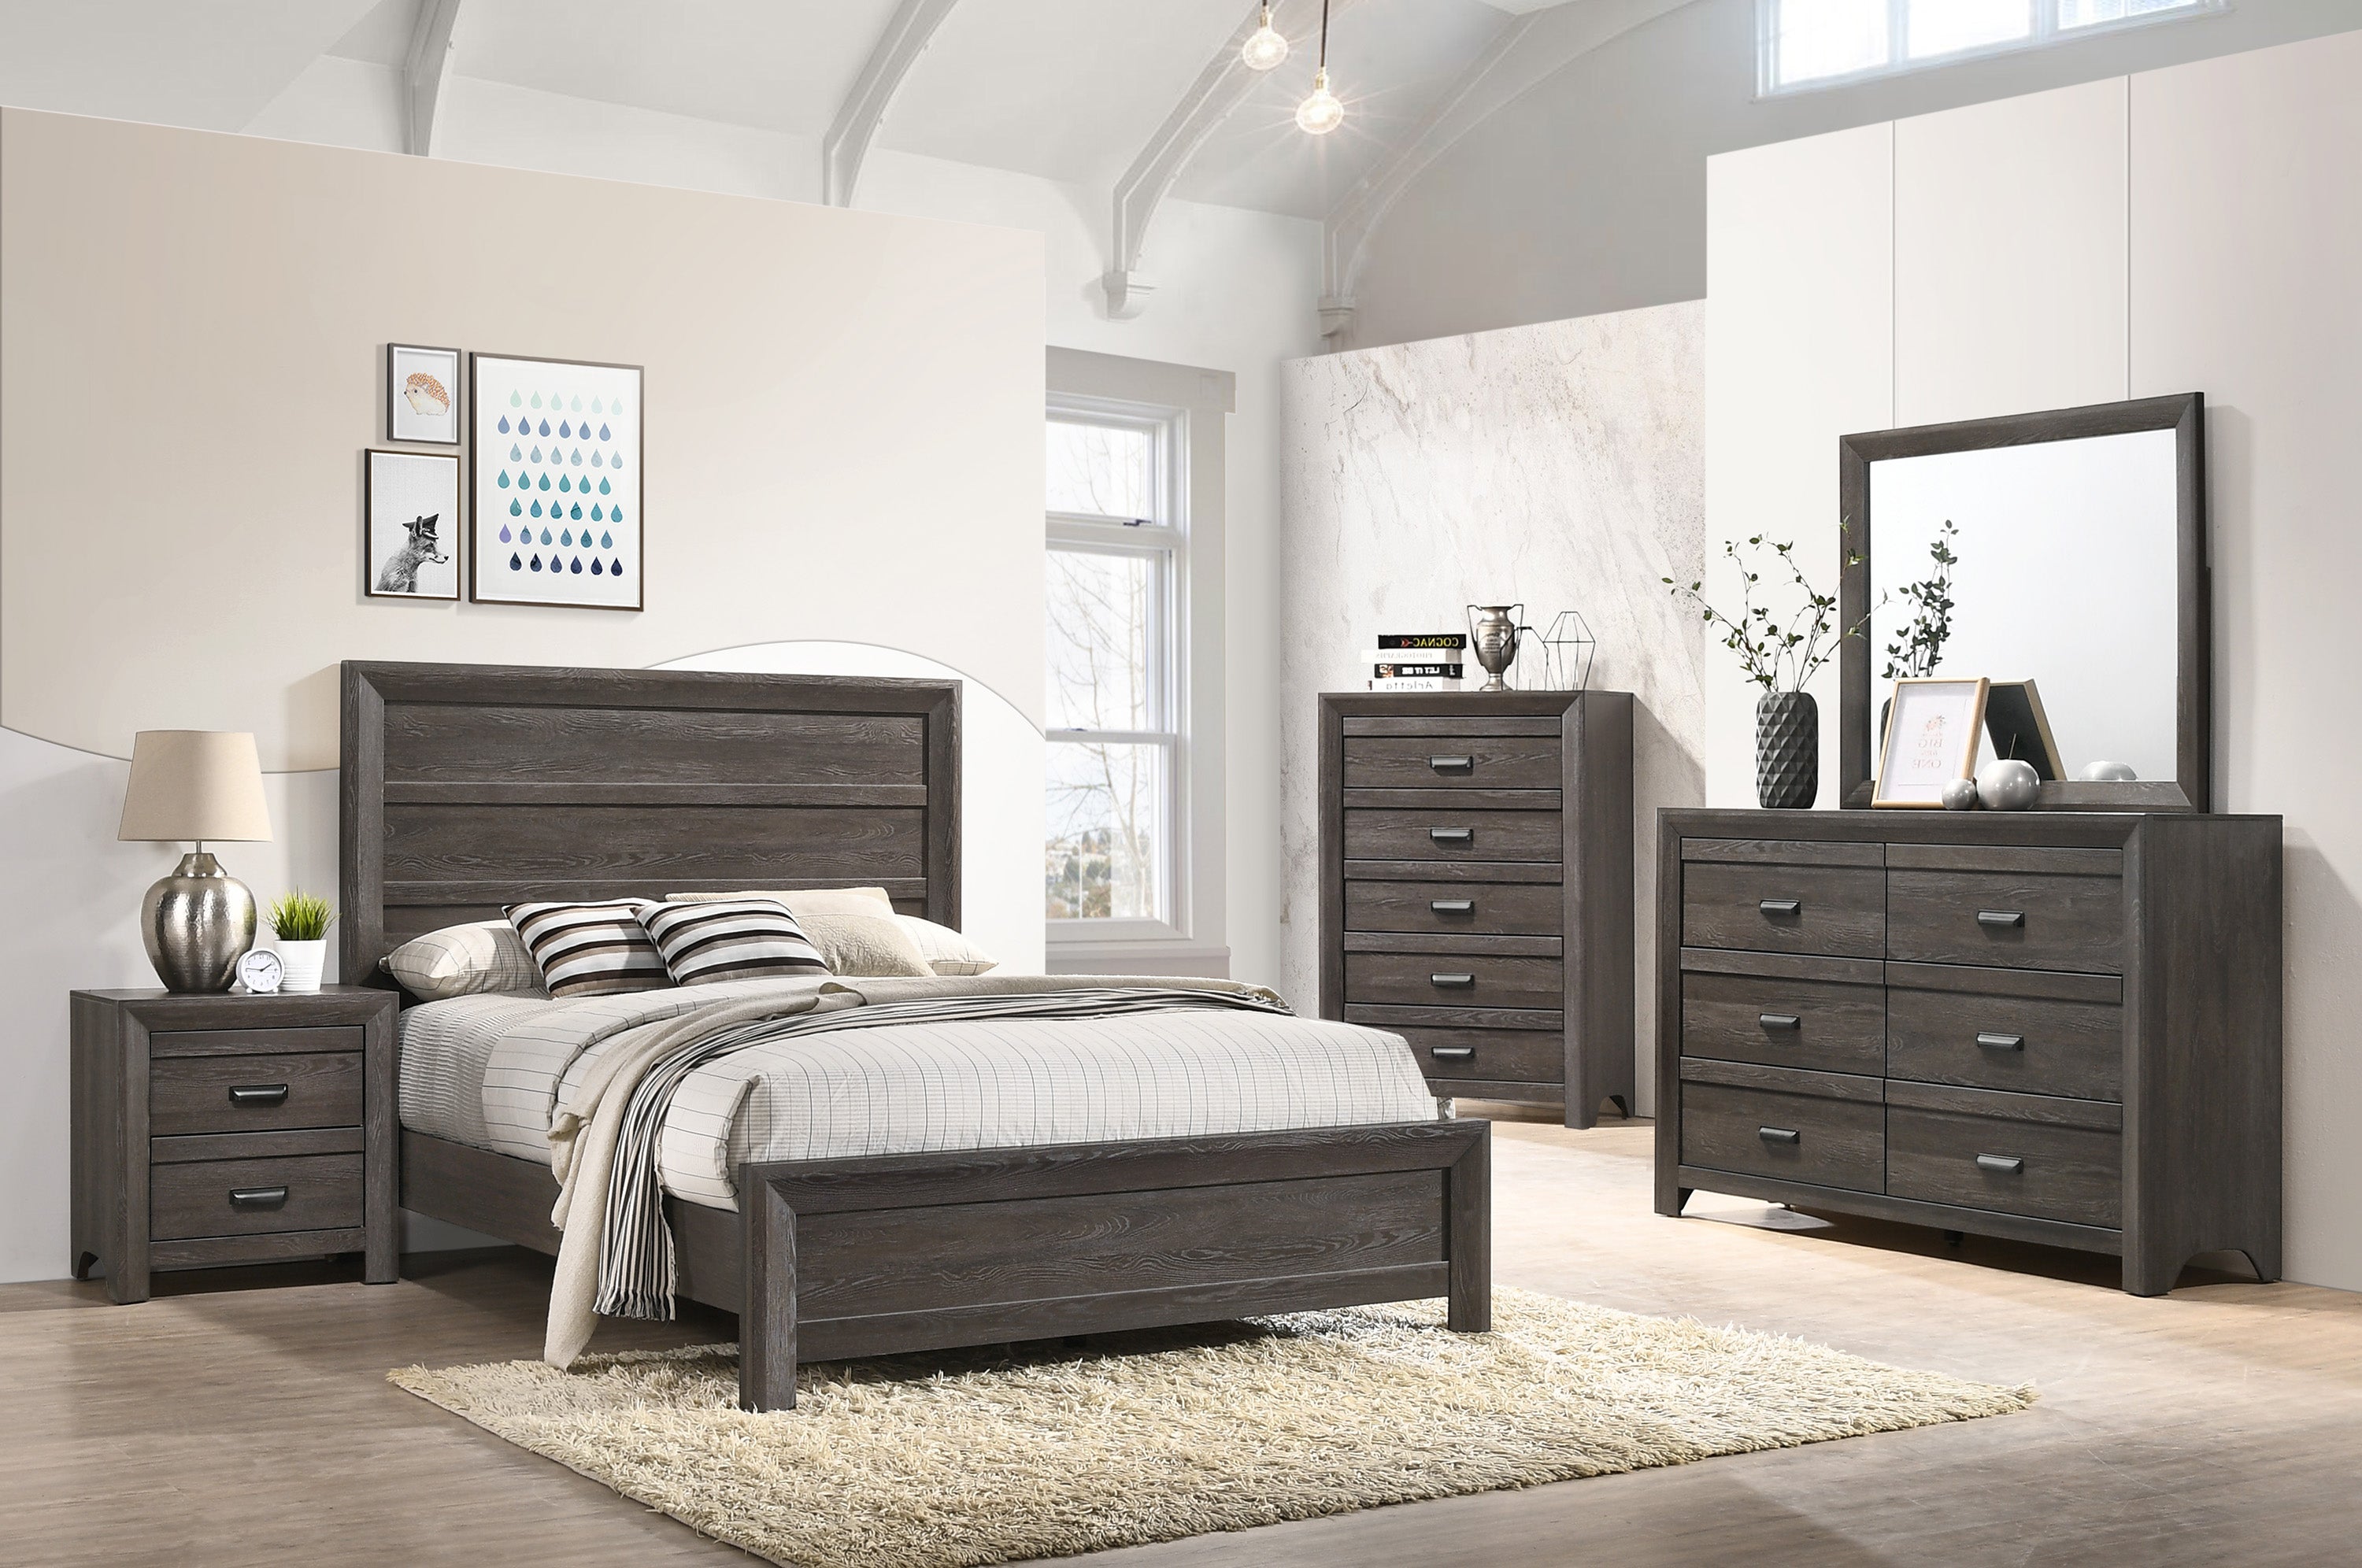 pebble grey bedroom furniture